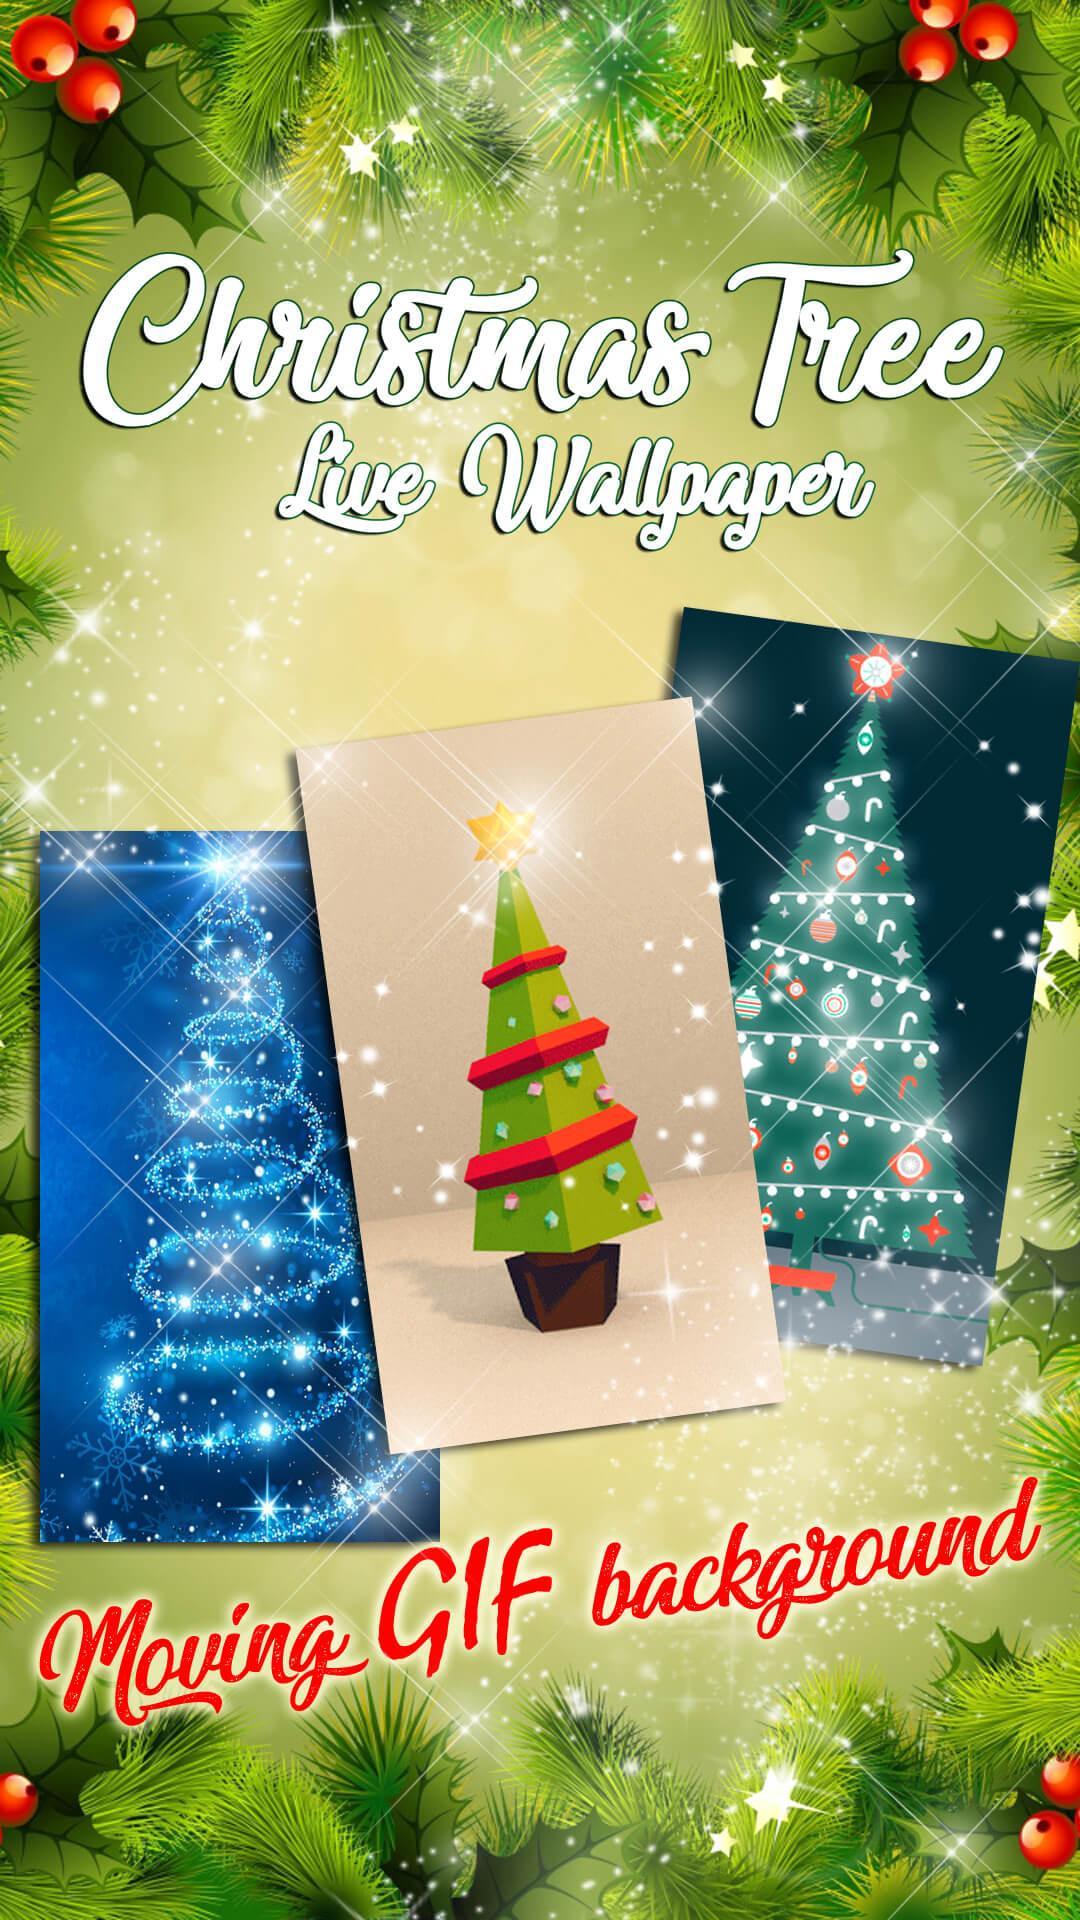 Wallpaper Pohon Natal Hidup Gambar Animasi For Android Apk